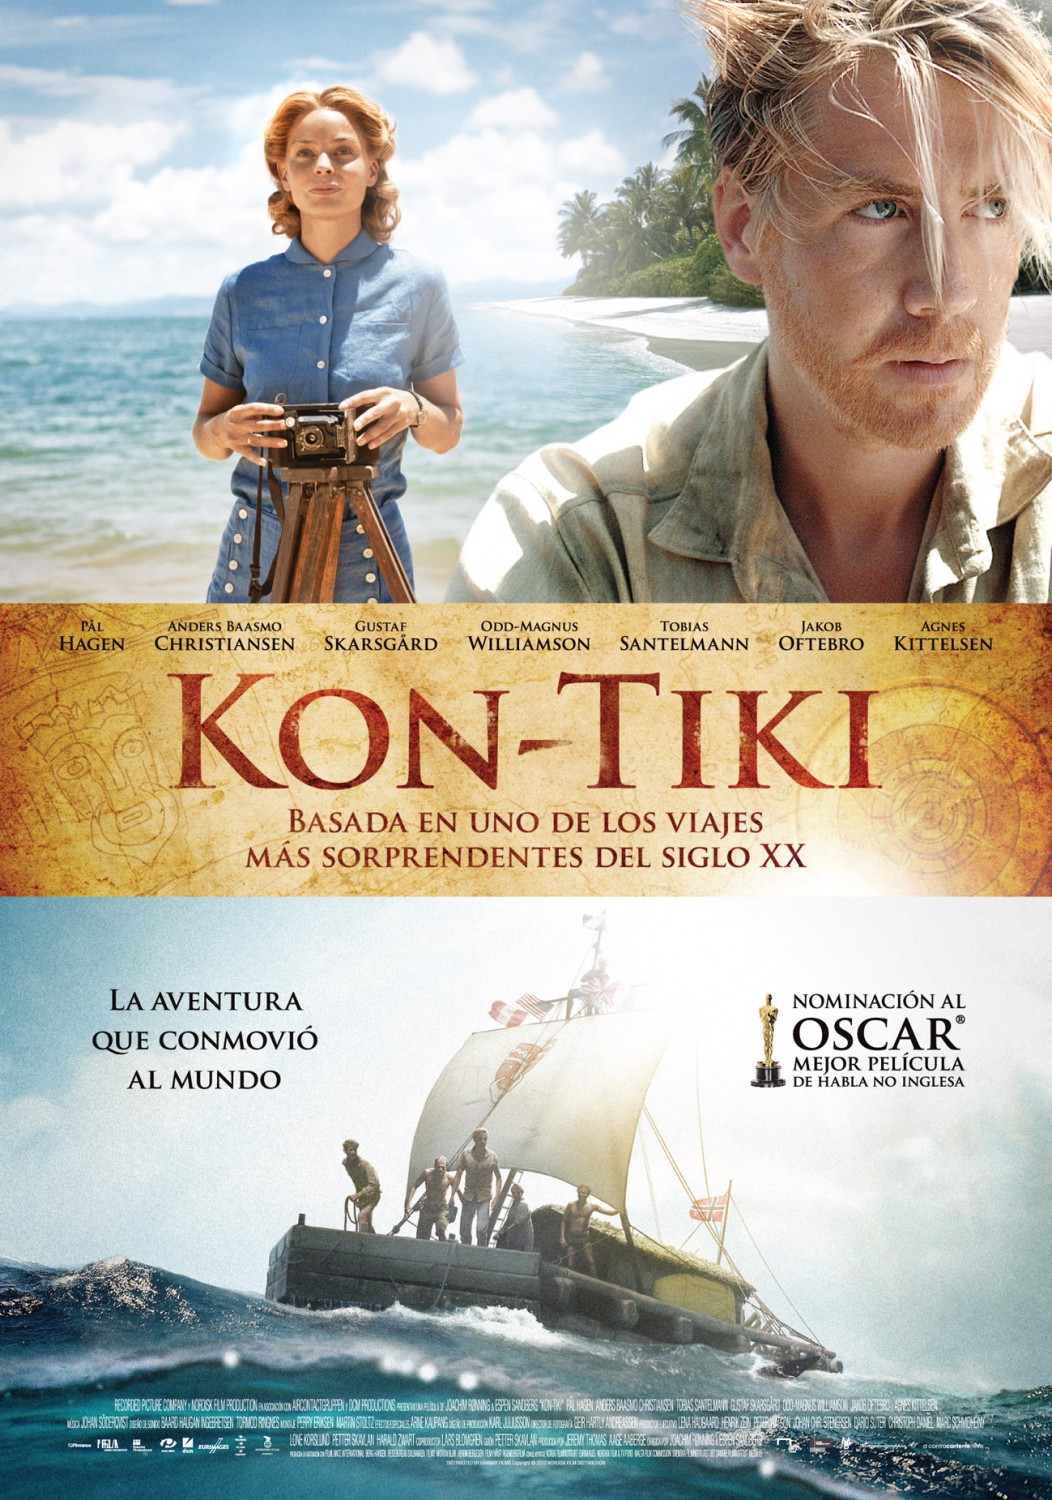 Extra Large Movie Poster Image for Kon-Tiki (#4 of 4)